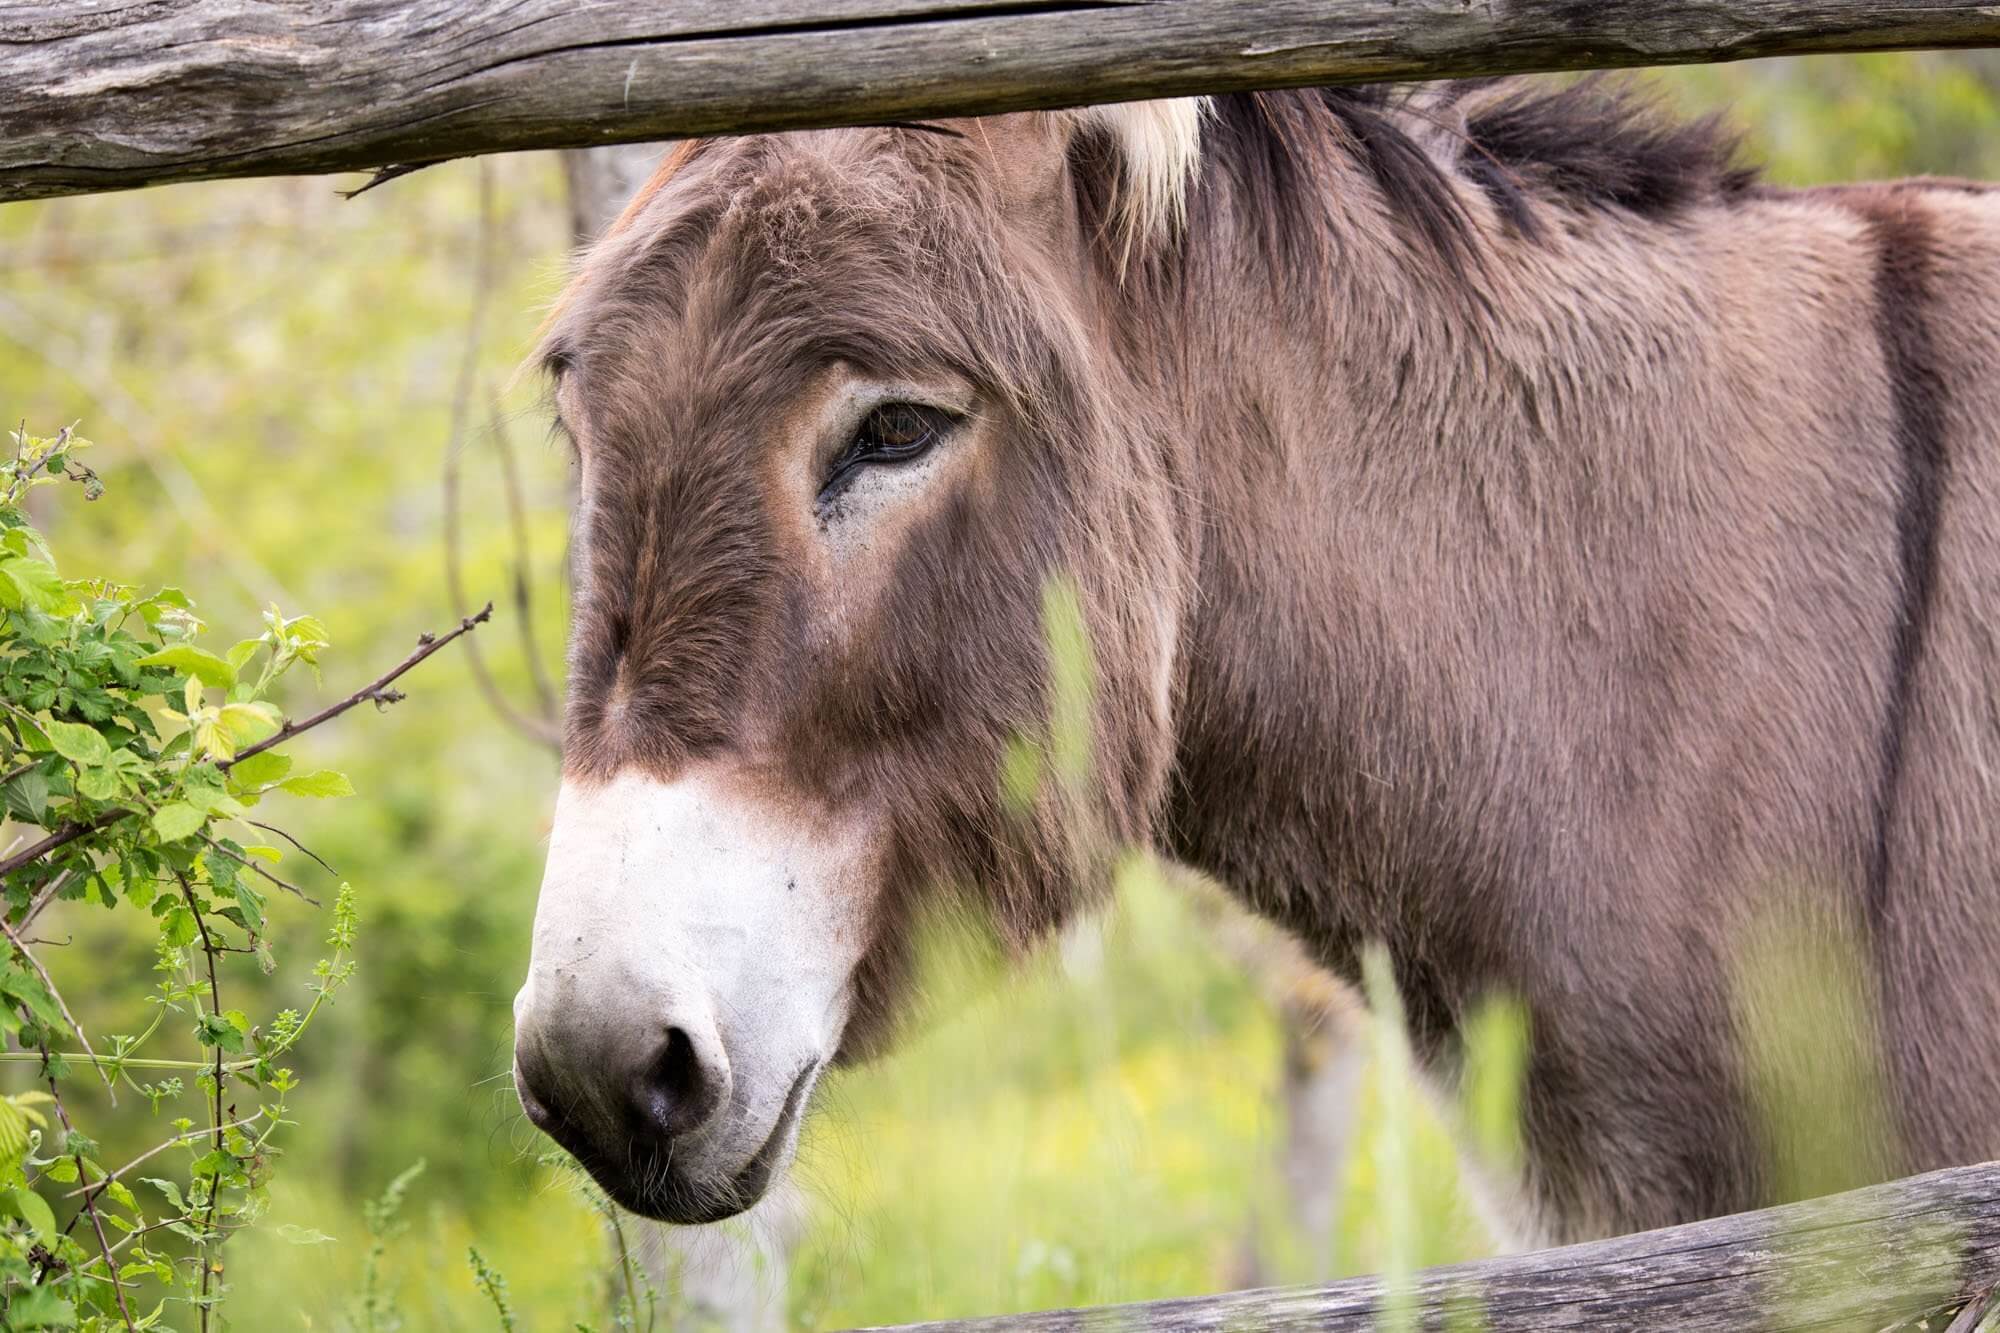 Giusy, the friendly resident donkey at Country House Masseria Acquasalsa near Agnone, Molise, Italy